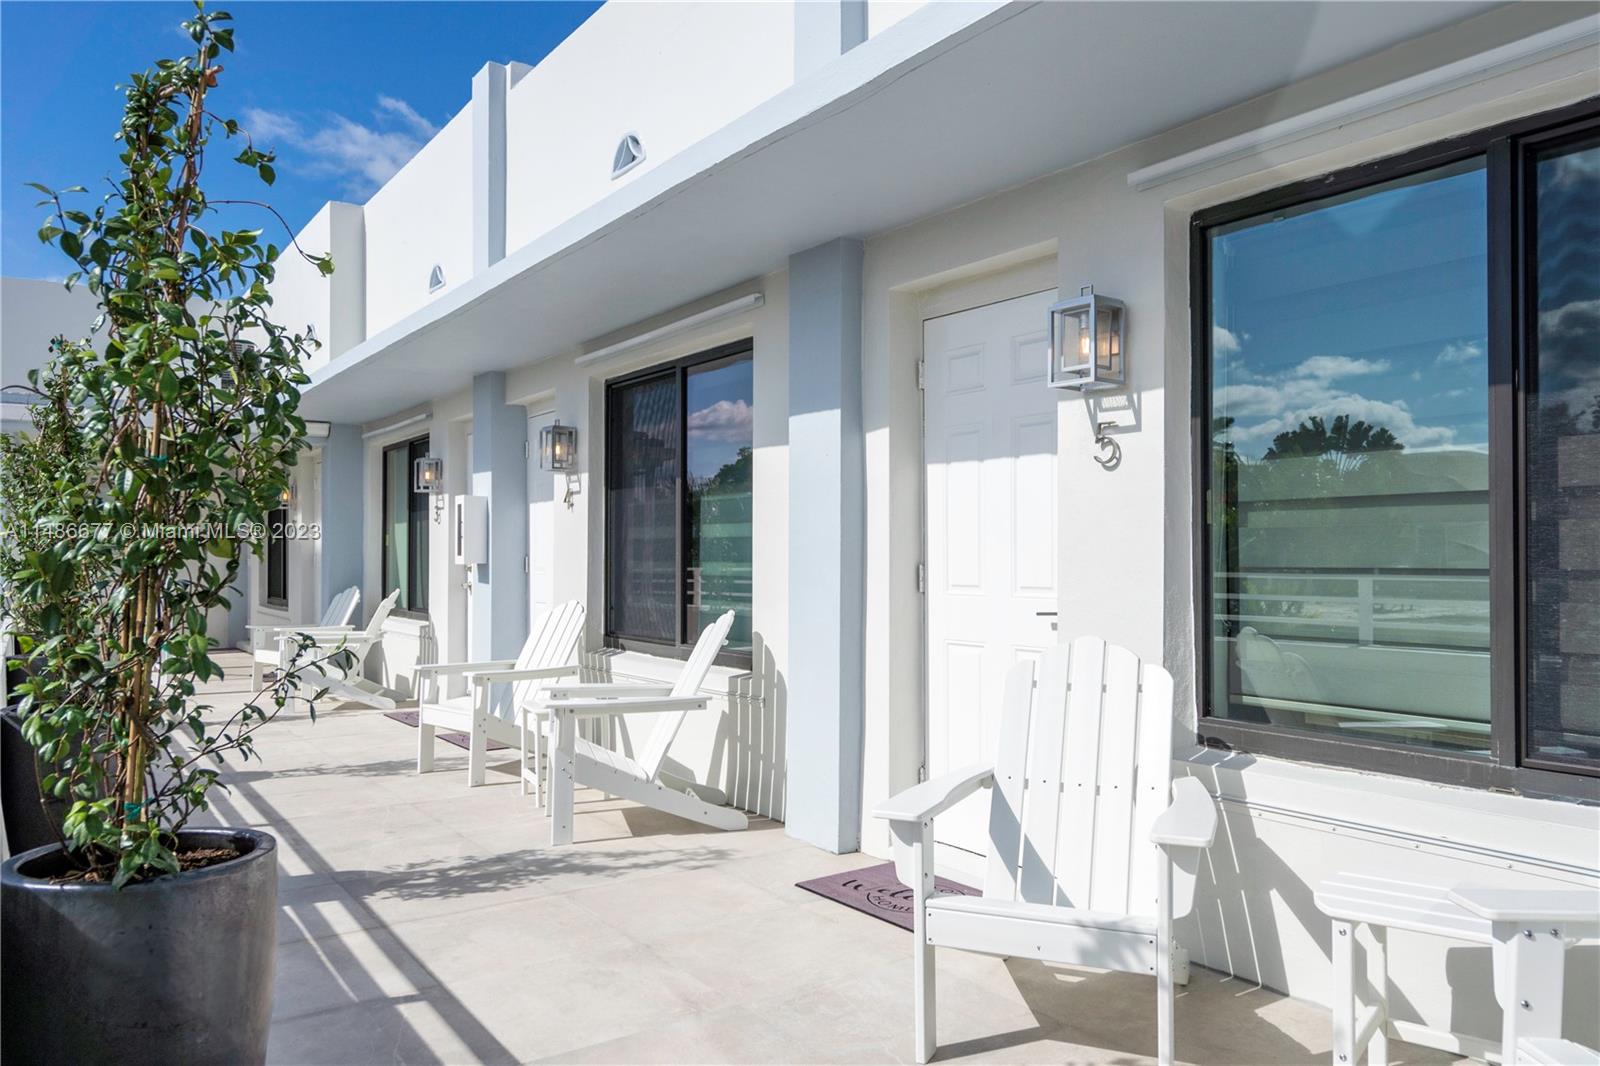 Rental Property at 1191 71st St St 3, Miami Beach, Miami-Dade County, Florida - Bathrooms: 1  - $1,900 MO.